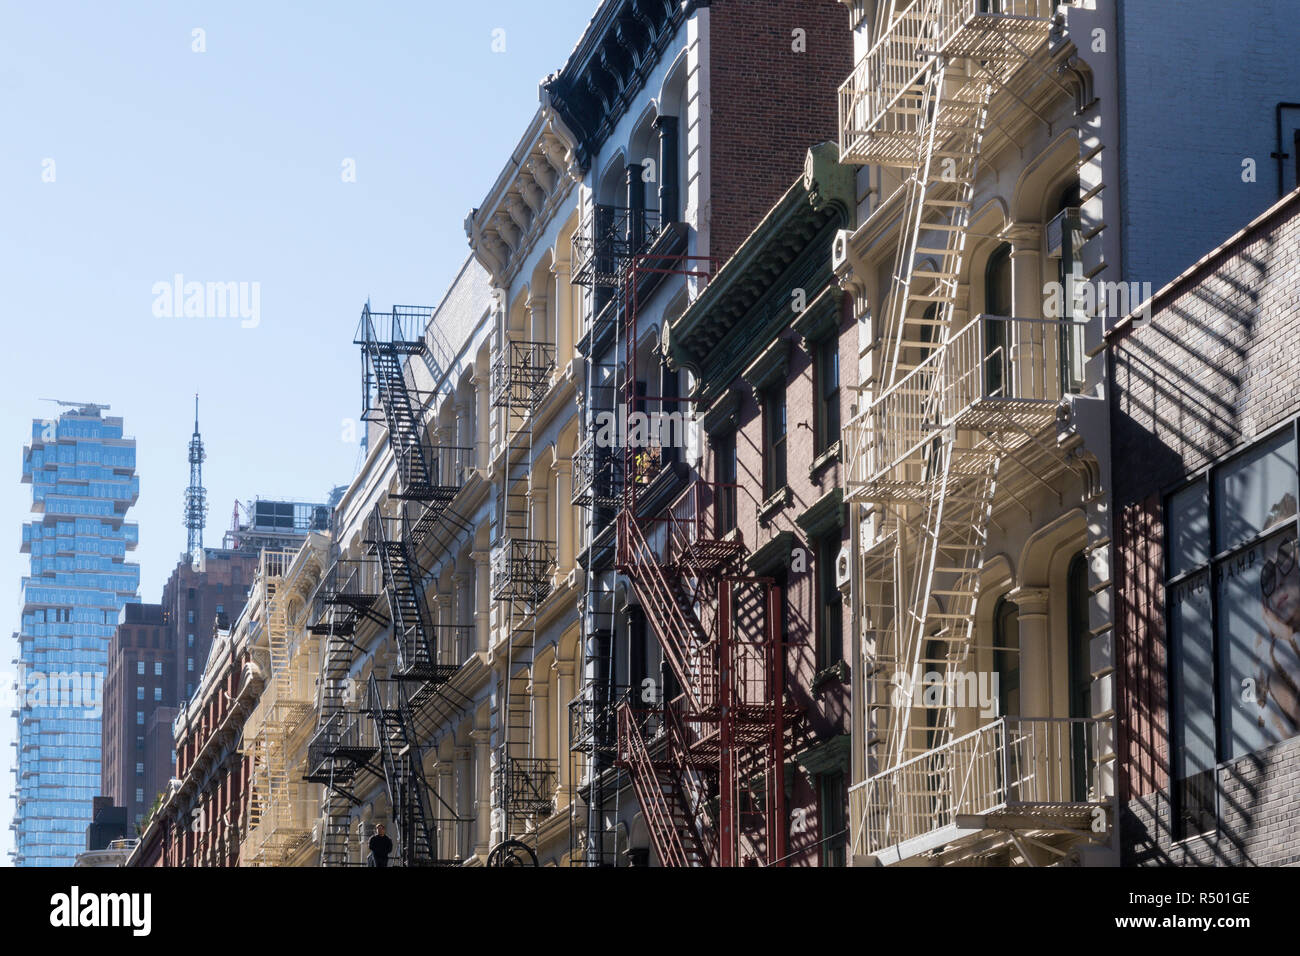 Building Facades on Greene Street, SoHo Cast Iron Historic District, NYC Stock Photo